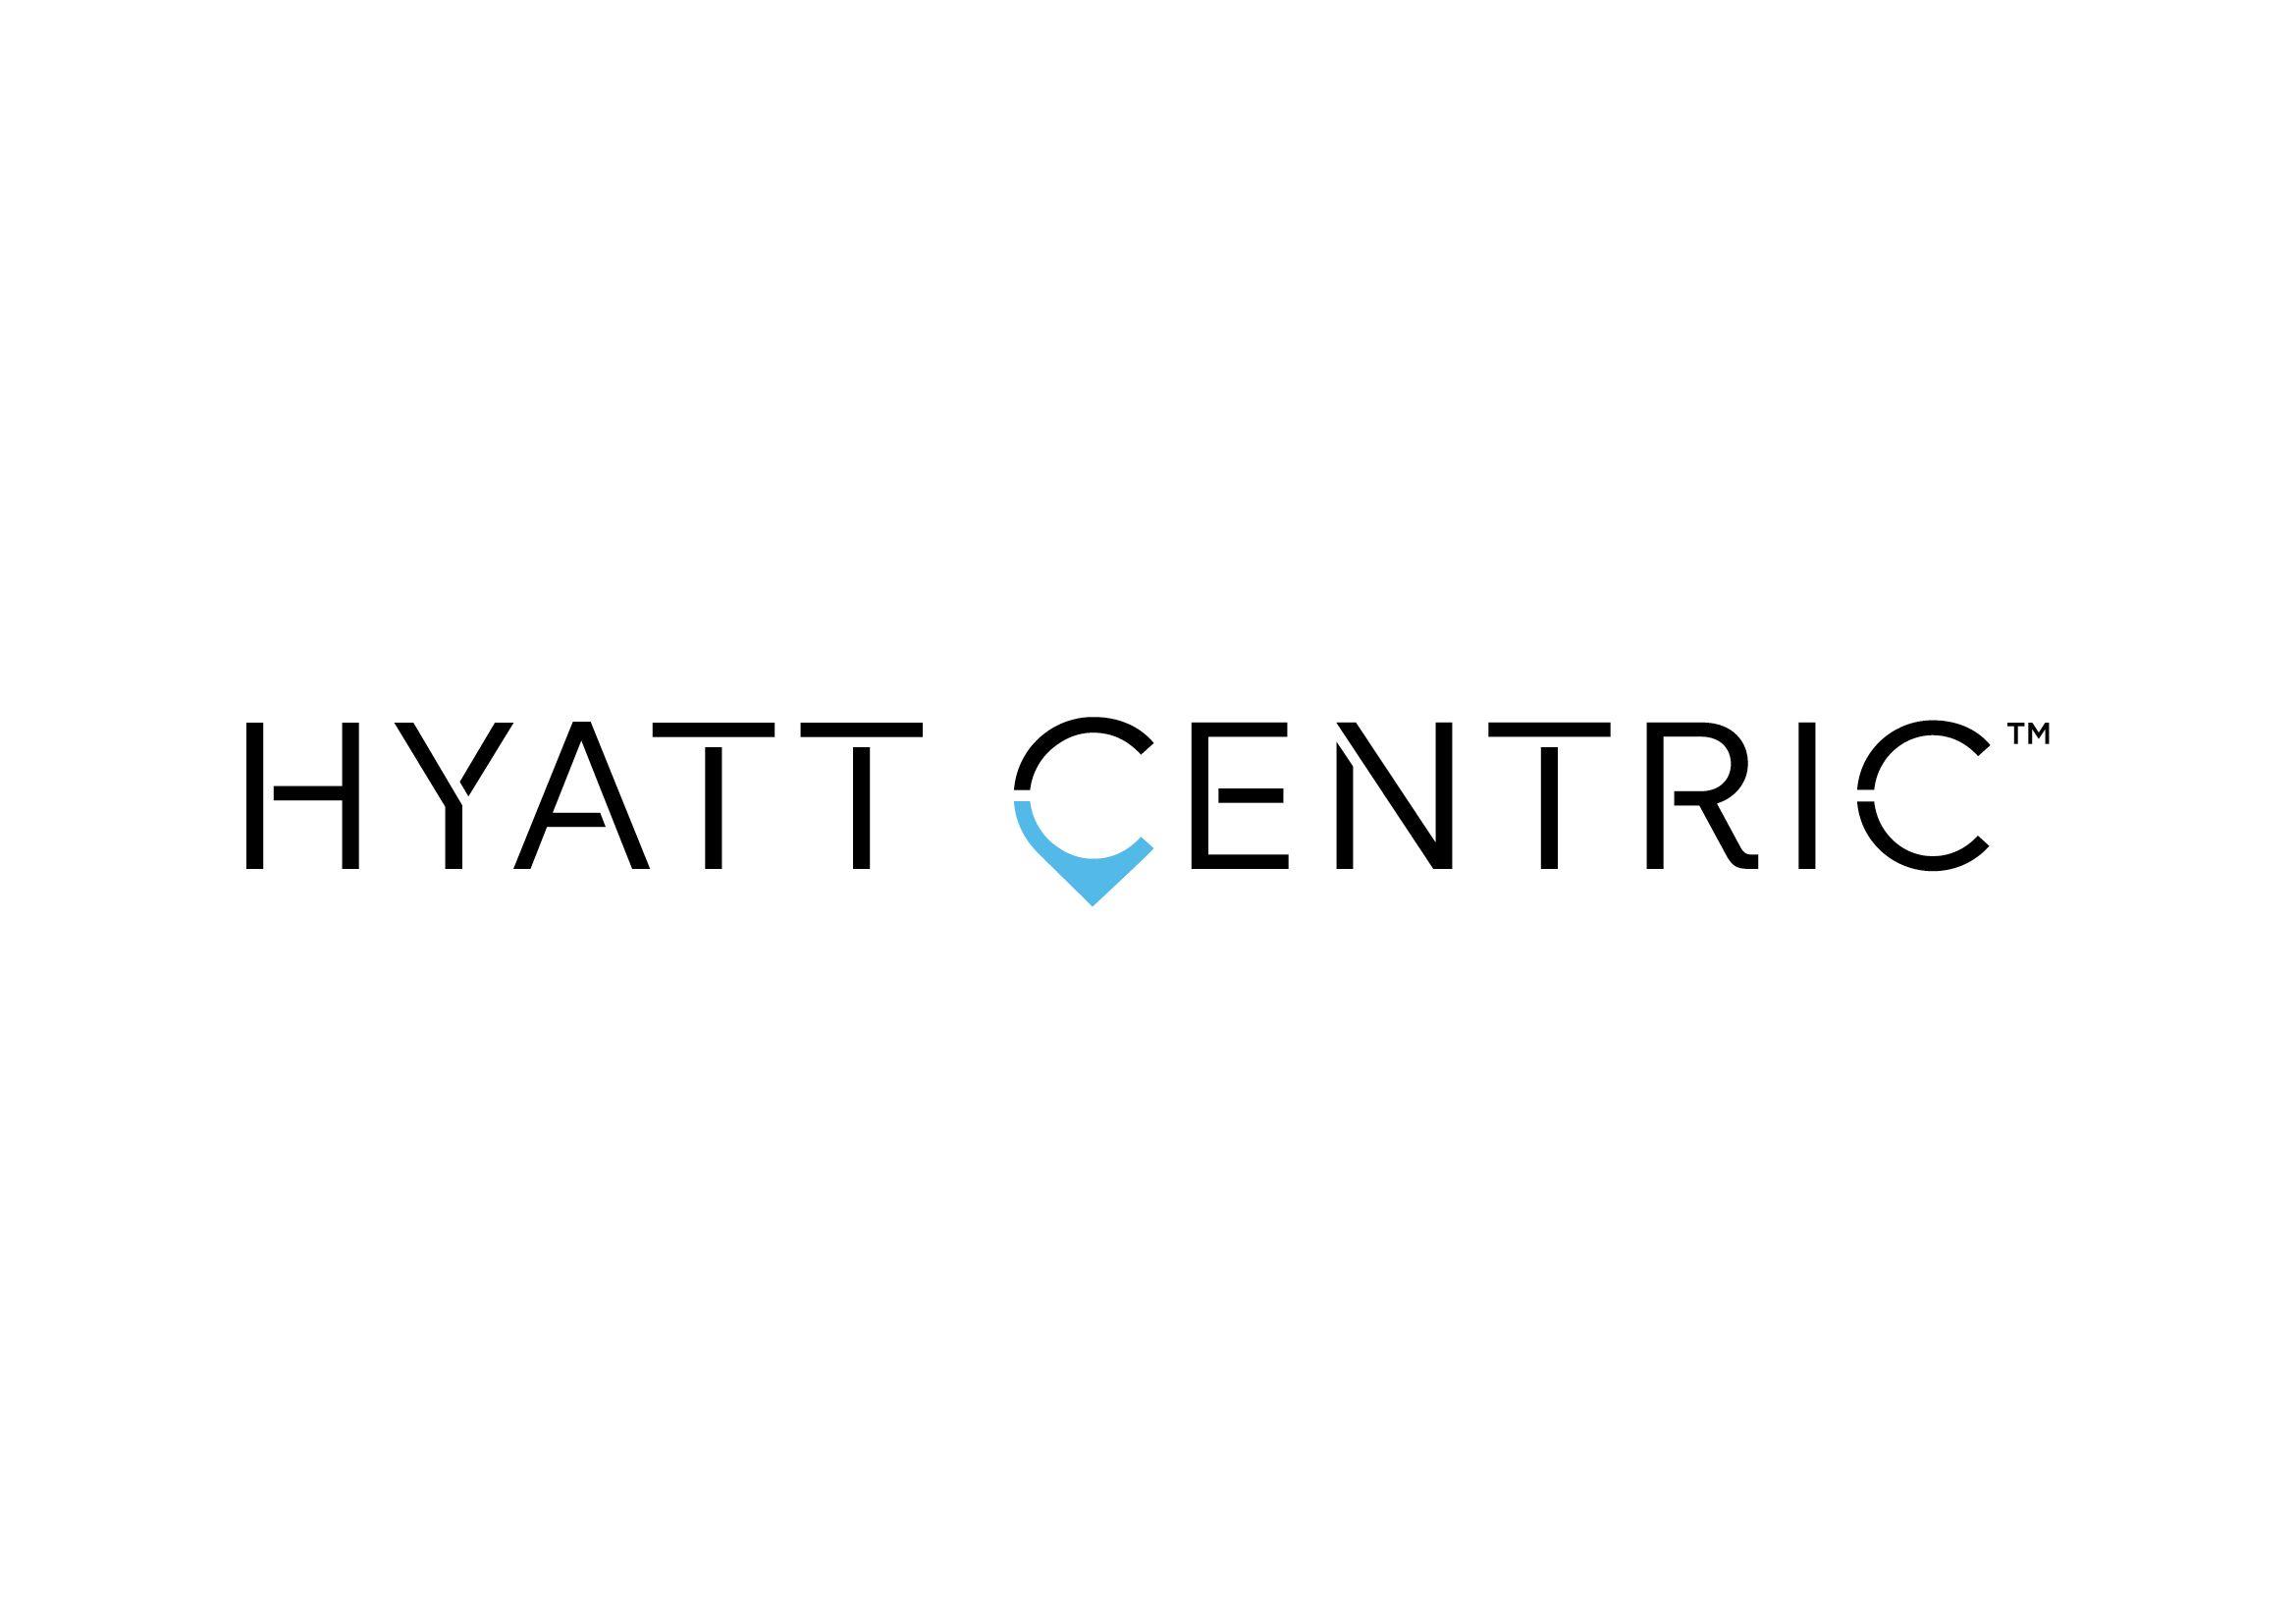 Centric Logo - Hyatt-Centric logo | All The Write Places